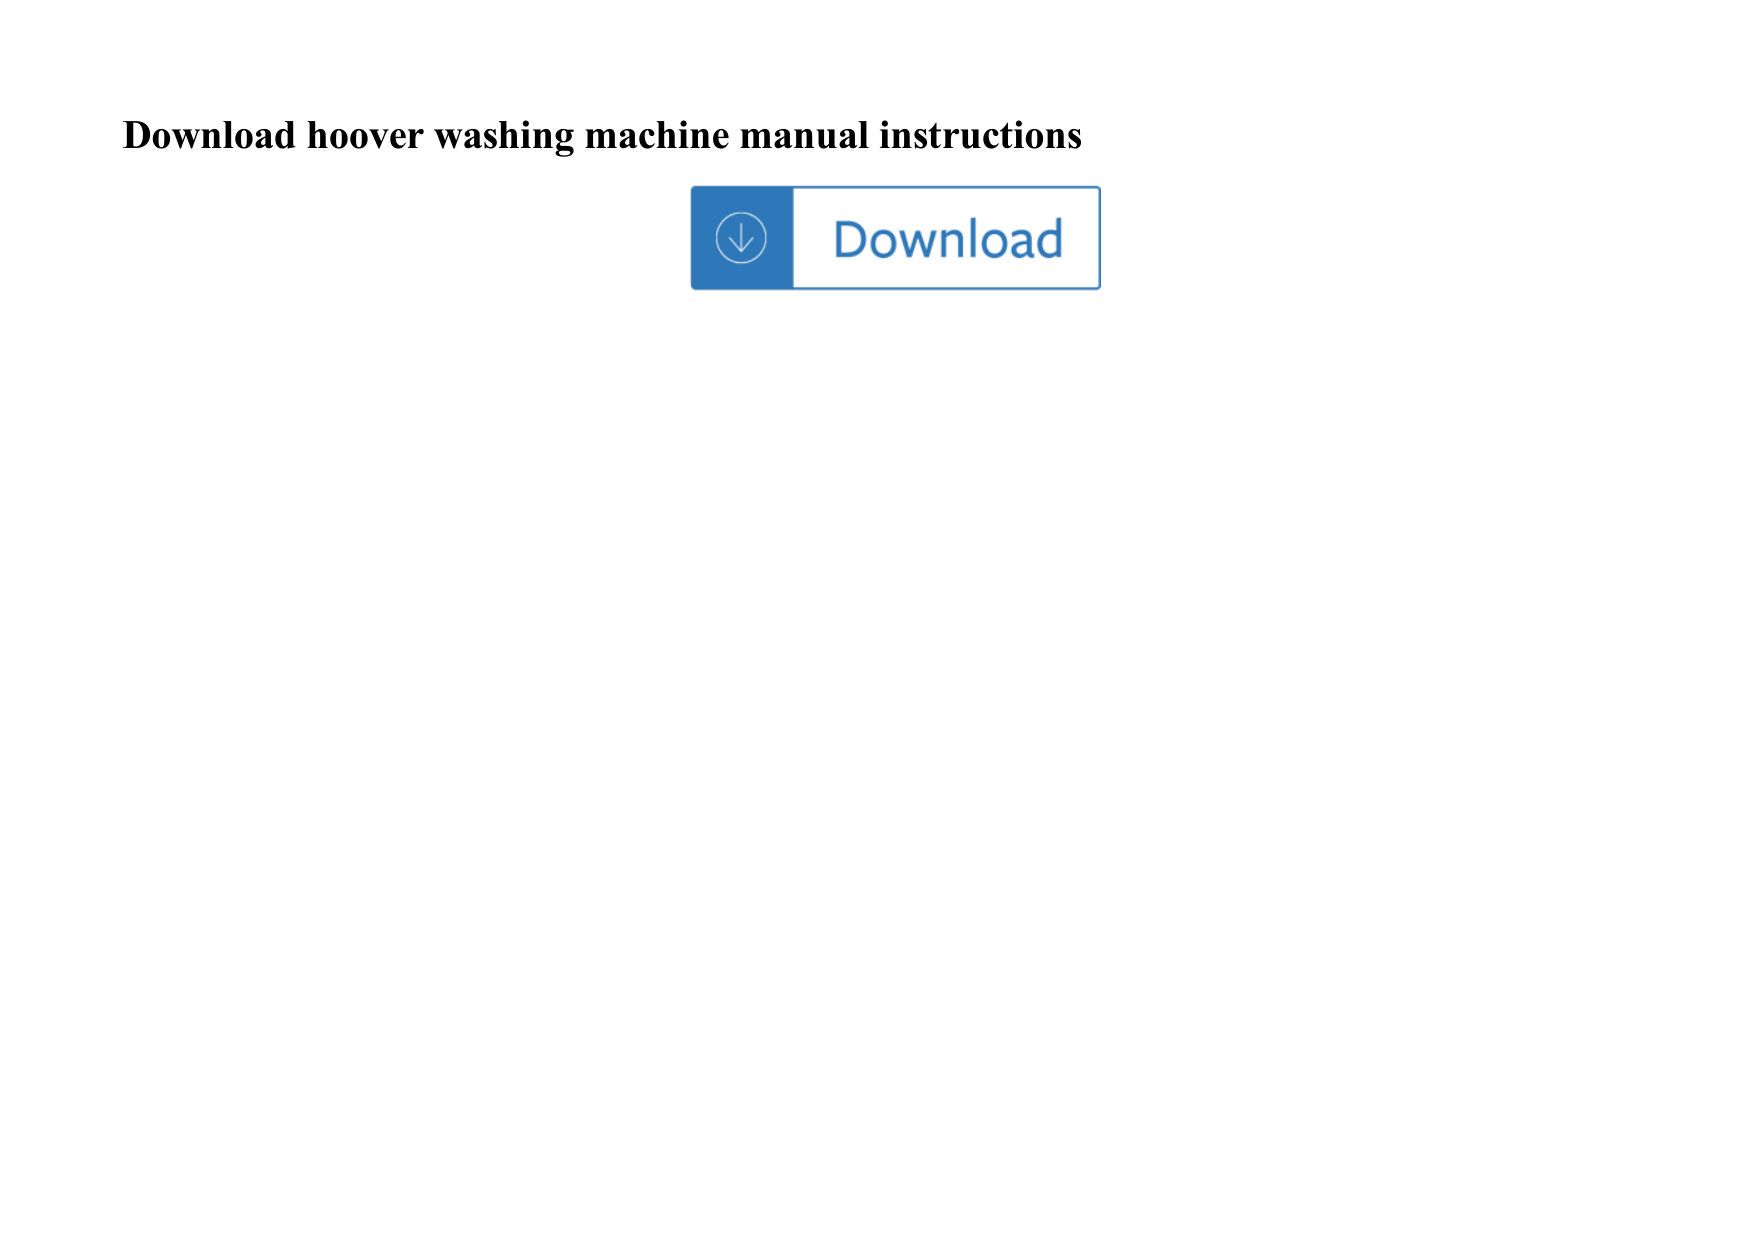 Hoover Washing Machine Manual Instructions